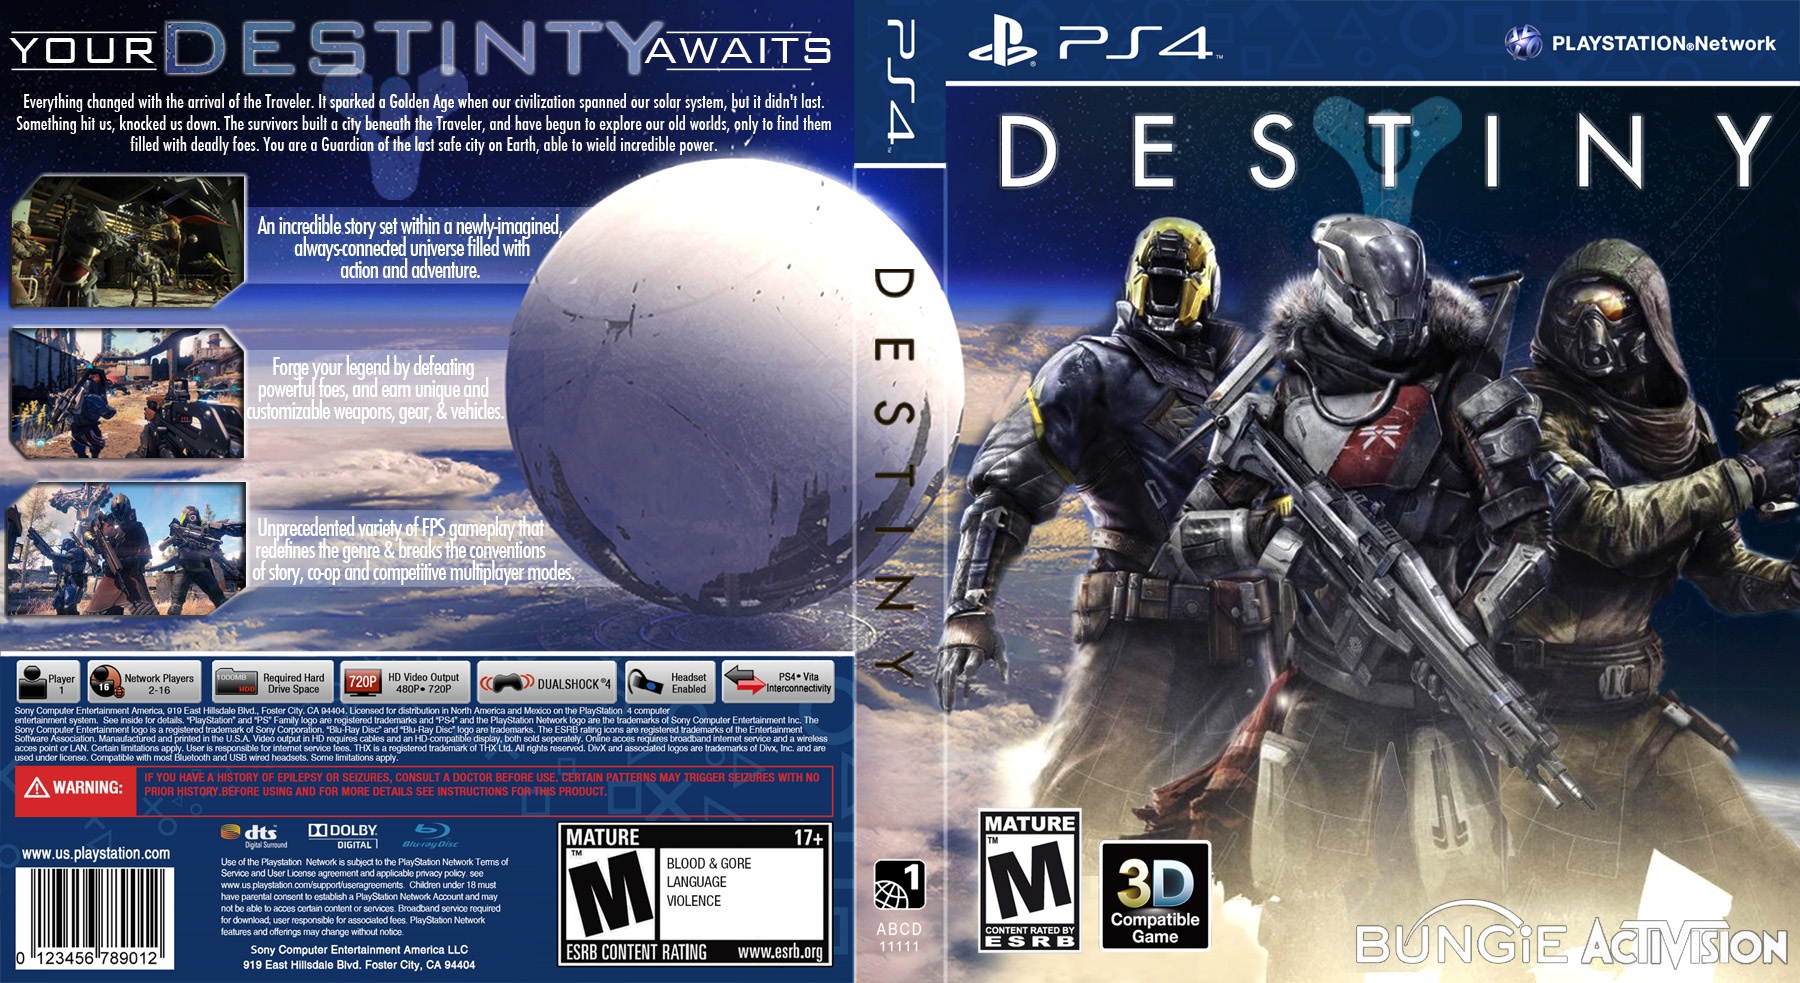 DESTINY PlayStation 4 Box Art Cover by Ultraviolet32x